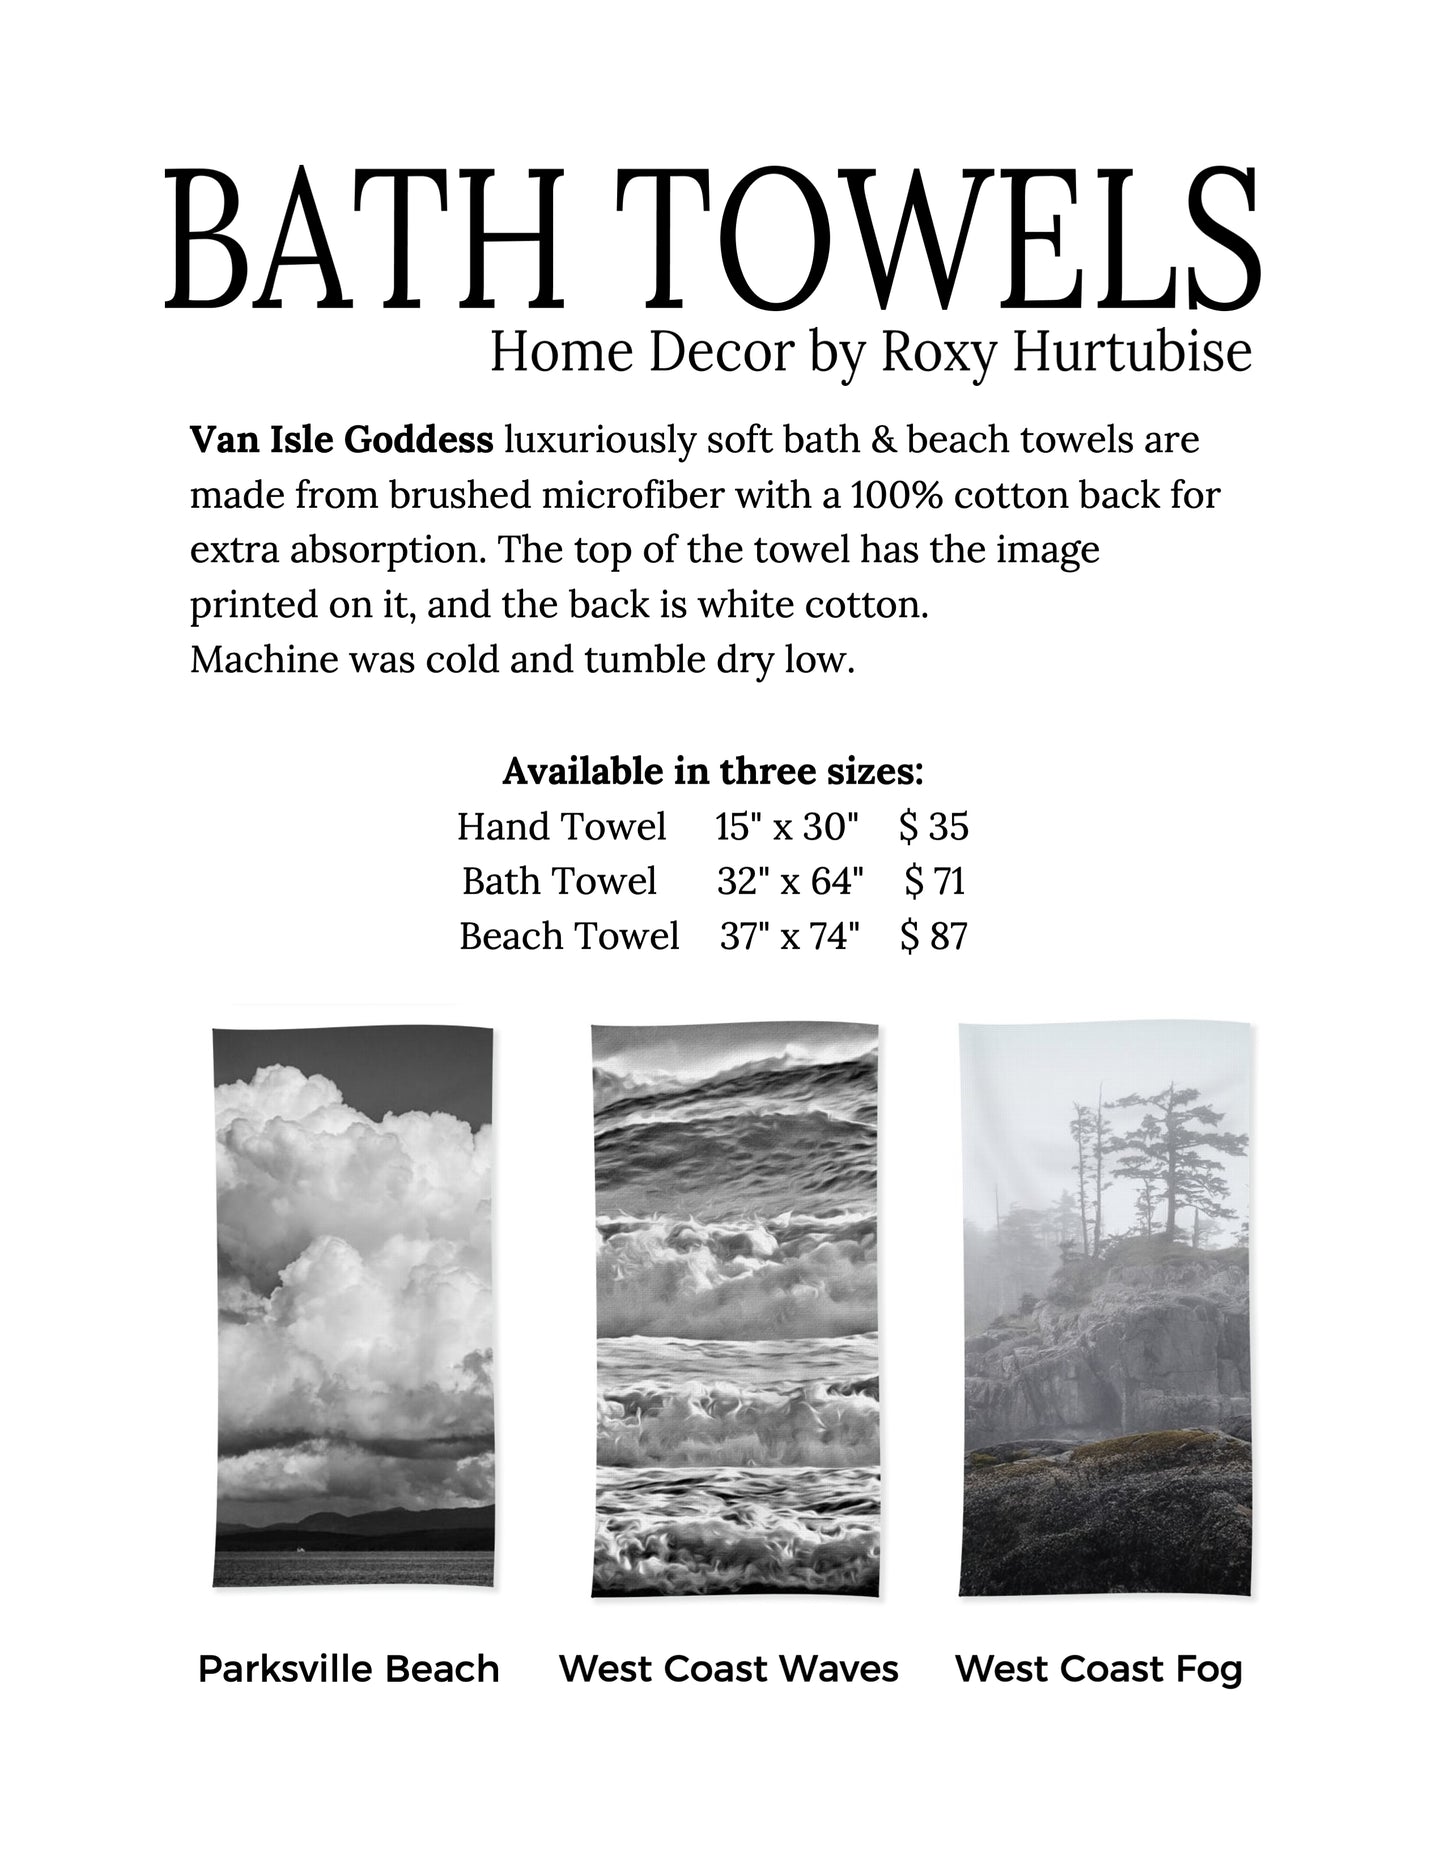 Parksville Beach Bath & Beach Towels